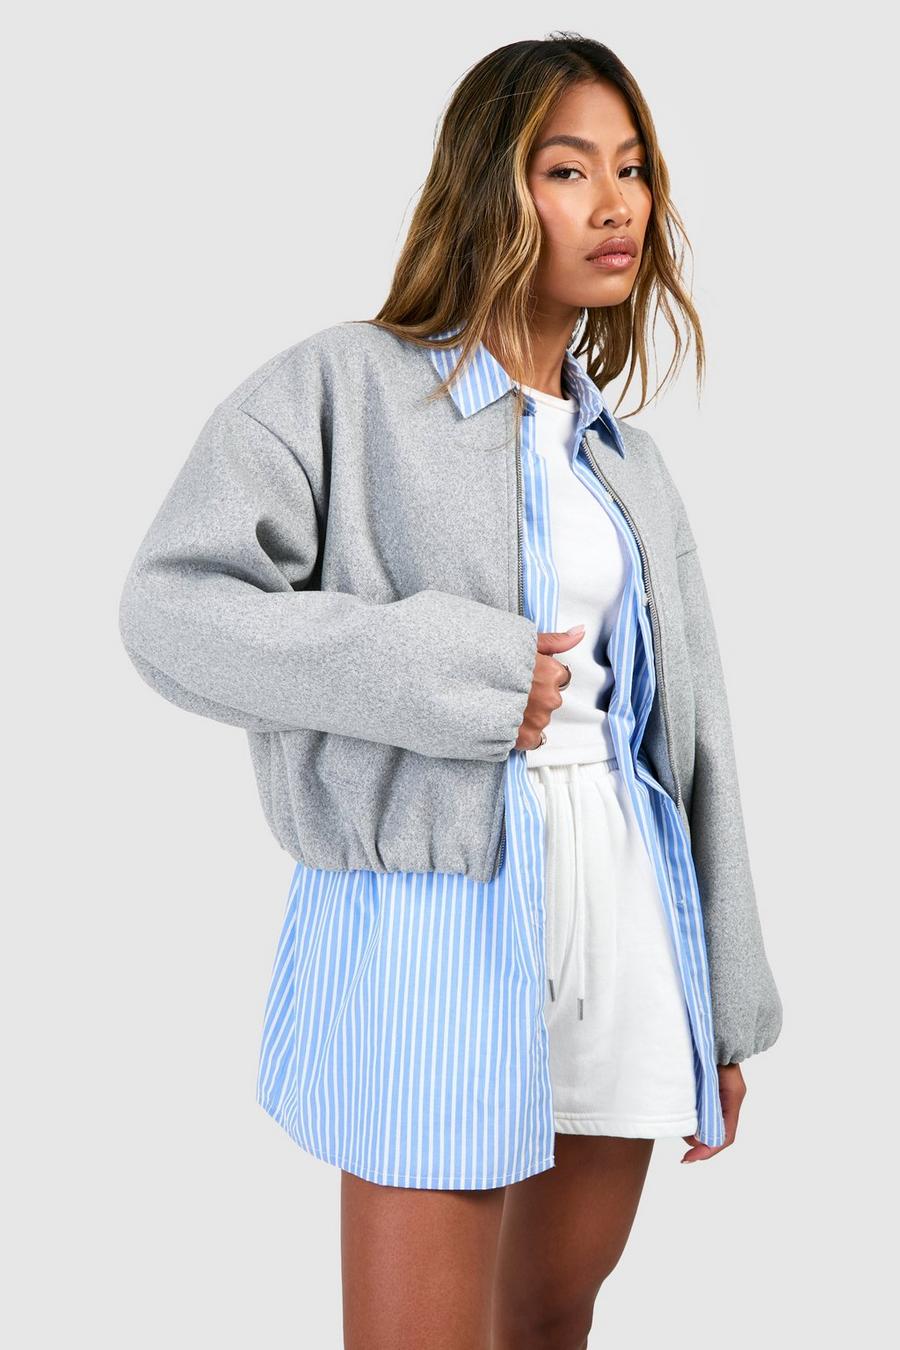 Grey marl Wool Look ajmone suede buttoned shirt jacket item 